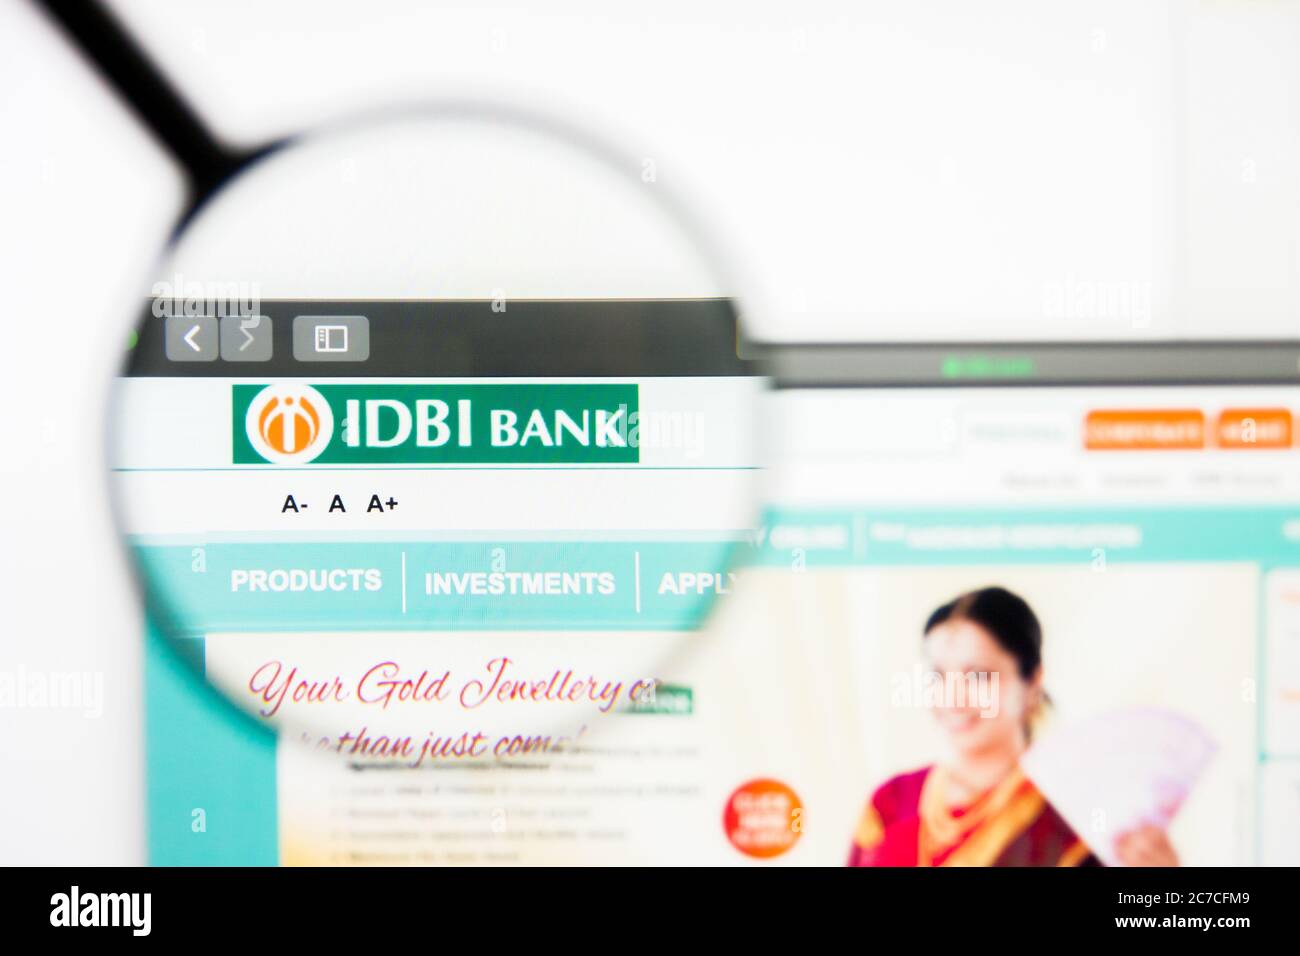 Los Angeles, California, USA - 5 April 2019: Illustrative Editorial of IDBI Bank website homepage. IDBI Bank logo visible on display screen. Stock Photo